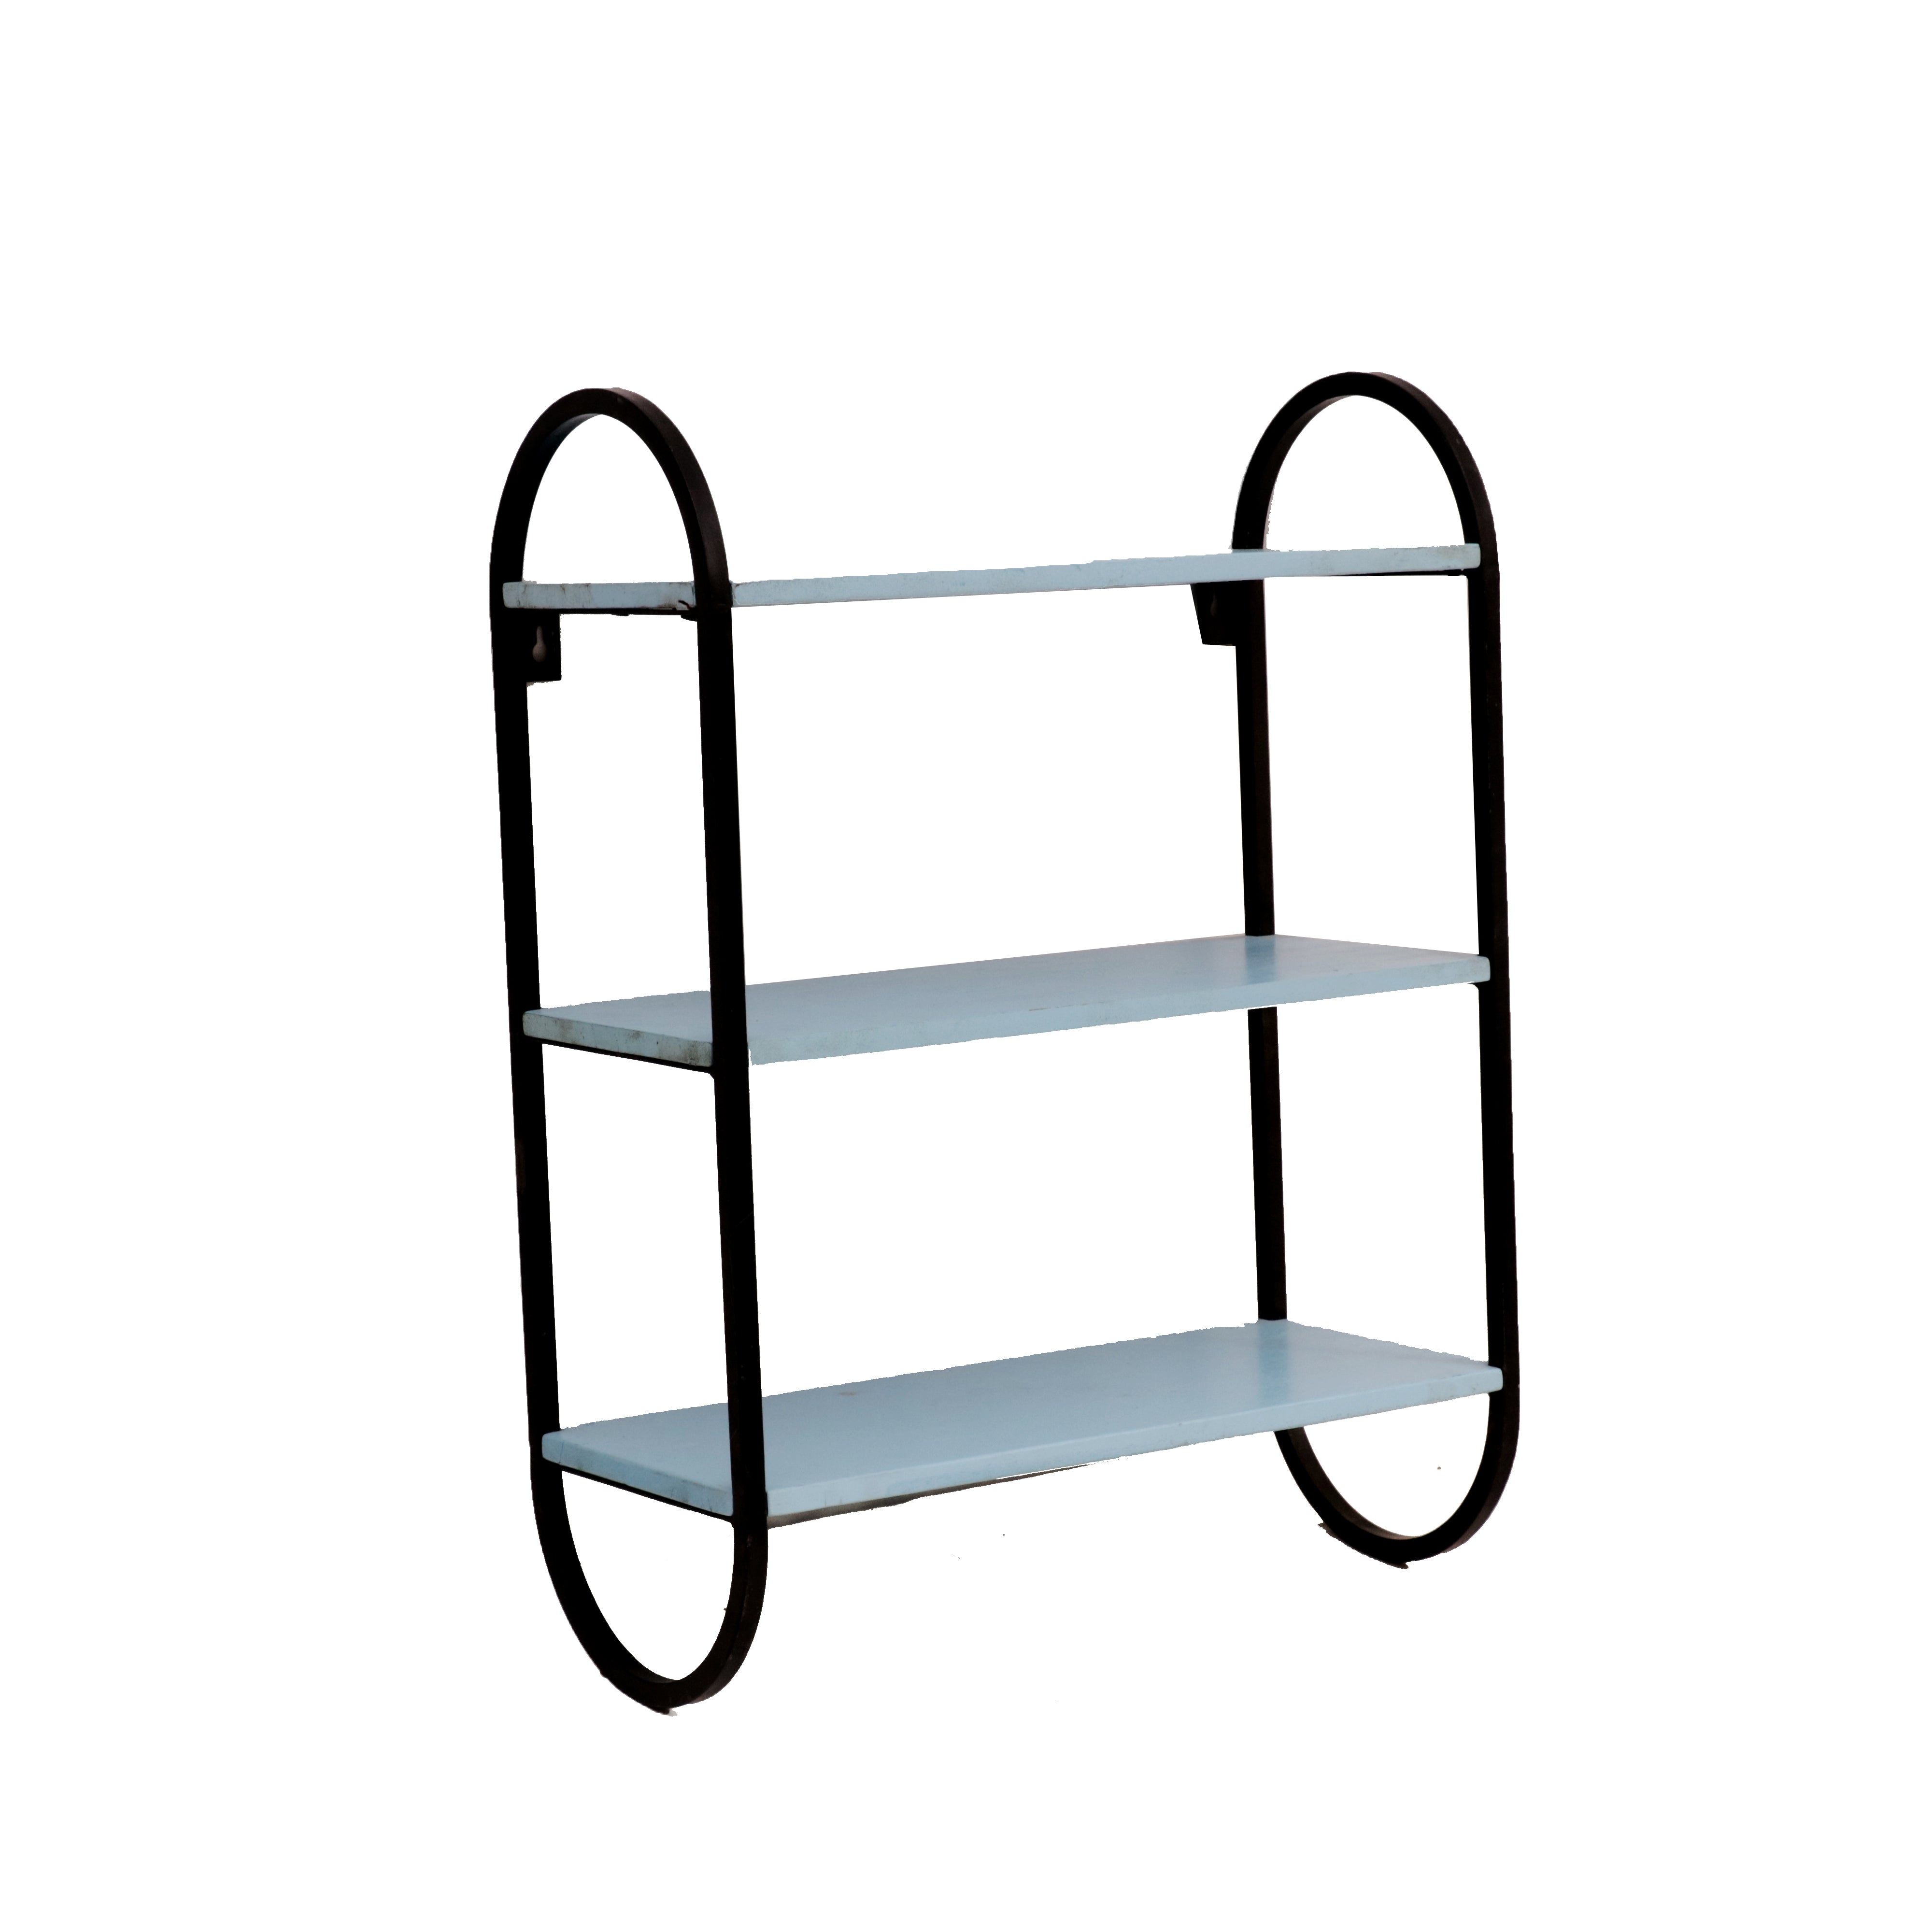 Oval Facing Frame Shelf Rack